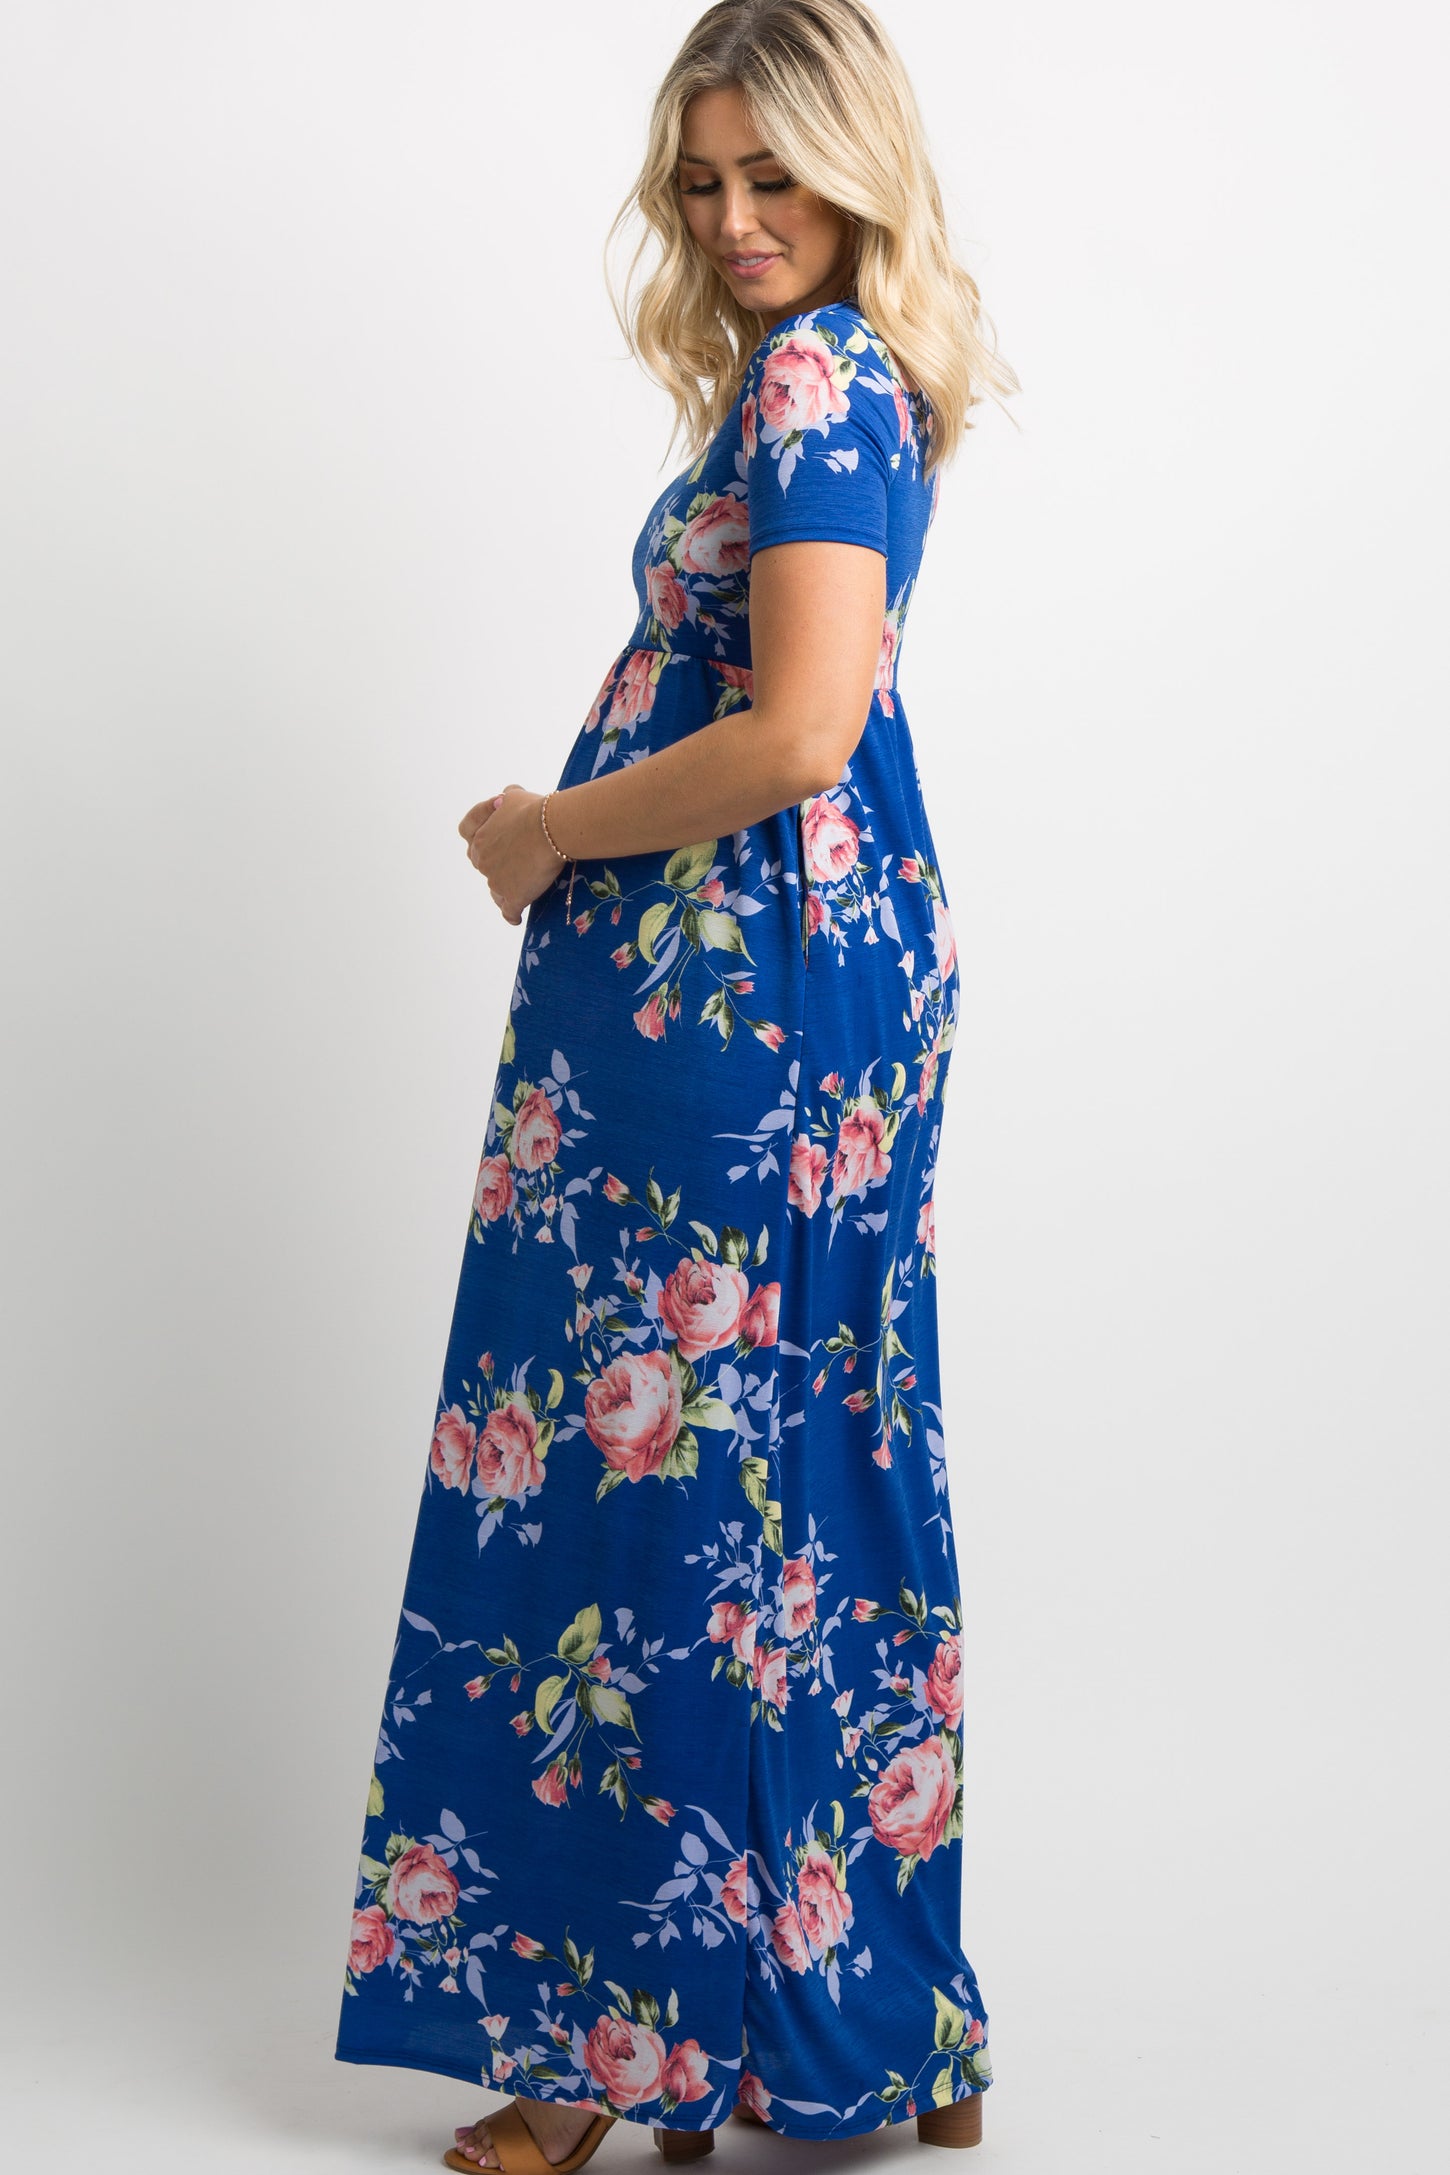 PinkBlush Royal Blue Rose Print Short Sleeve Maternity Maxi Dress